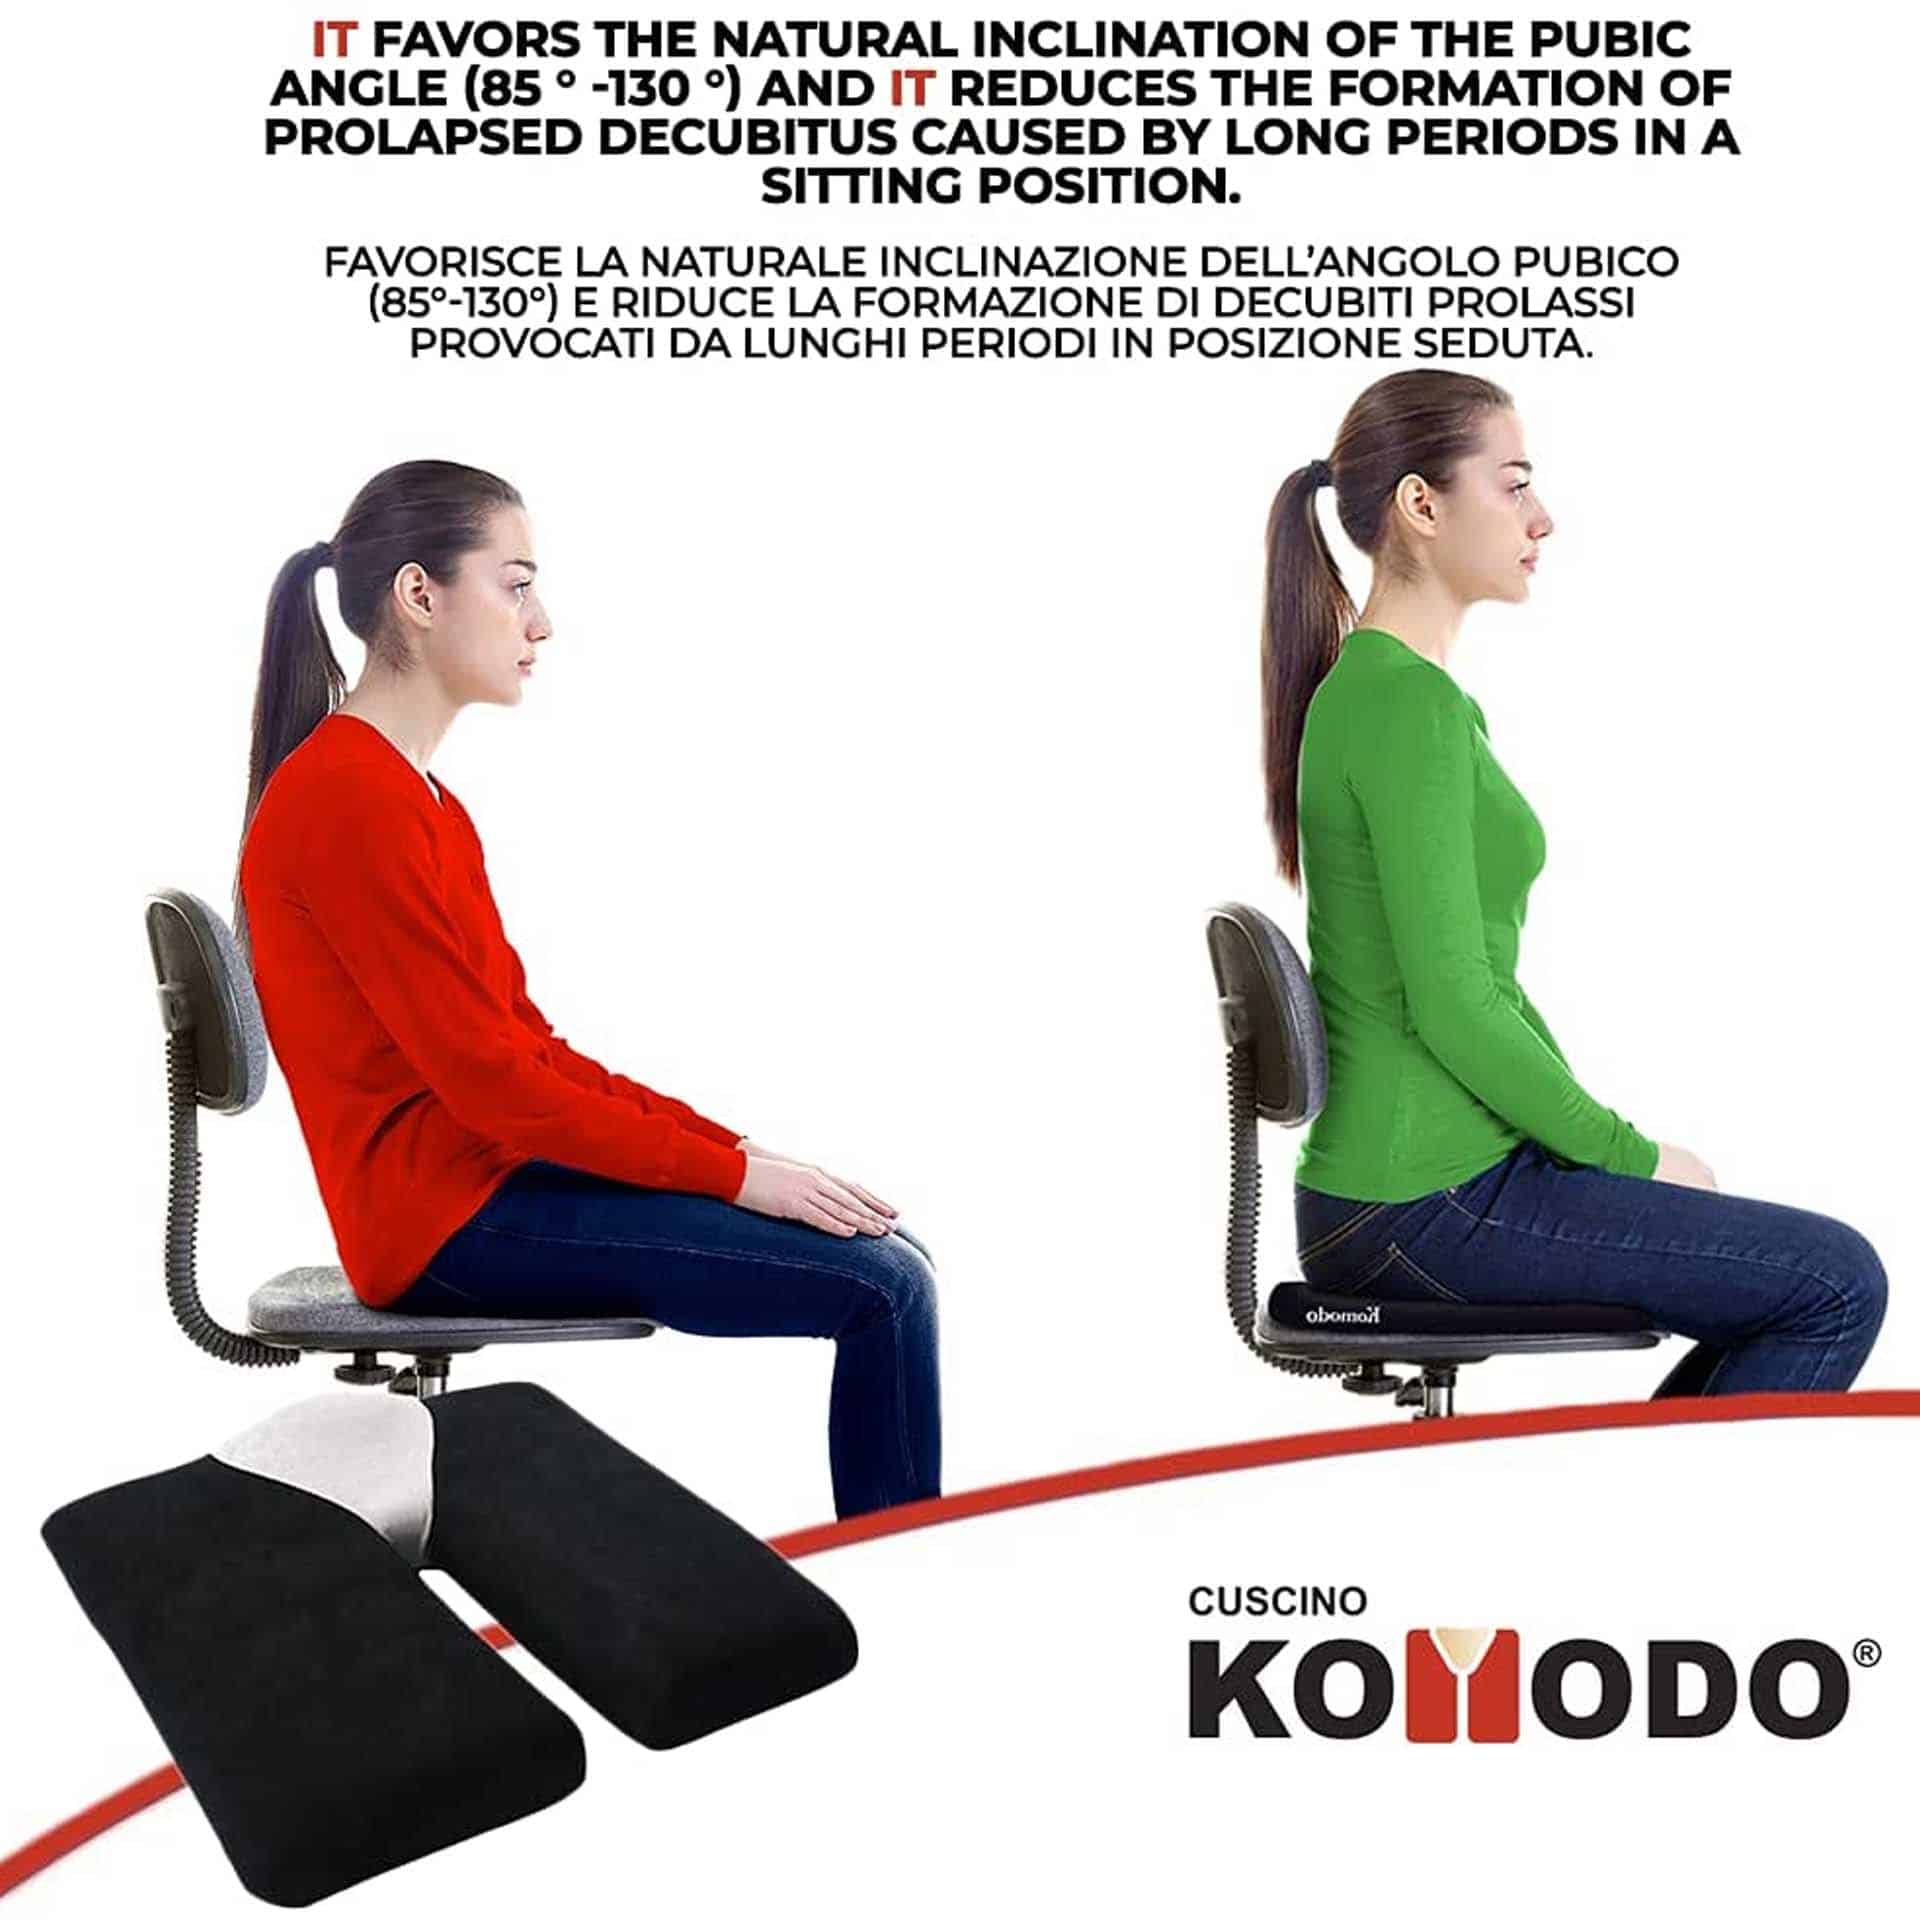 Komodo / Cuscino ergonomico sedia - € 95,00 cad. - My Benefit